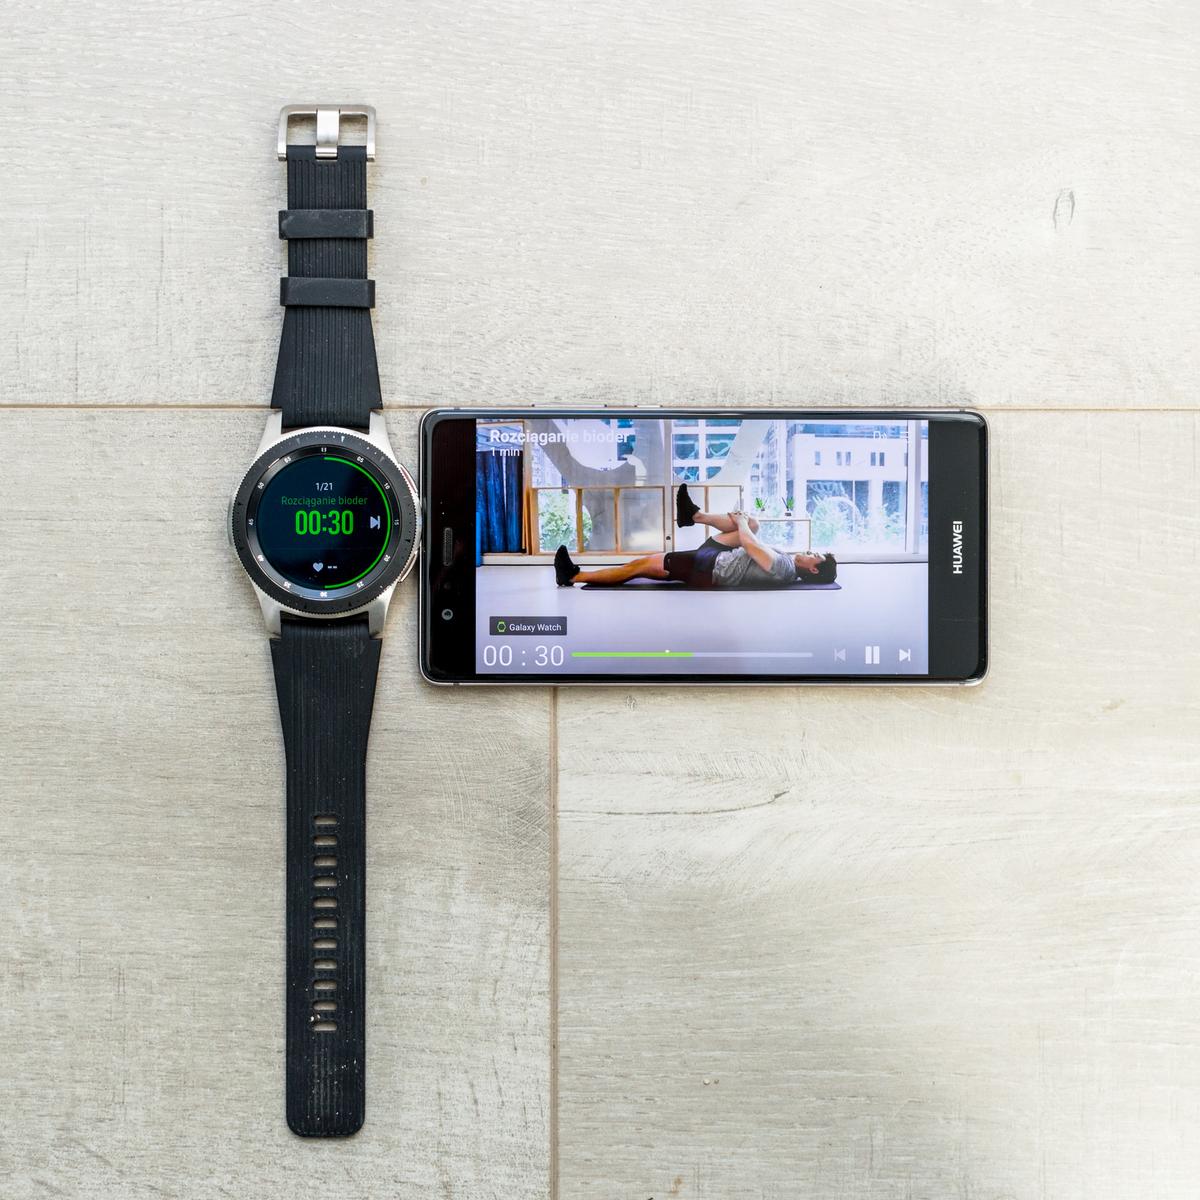 Samsung Galaxy Watch - recenzja class="wp-image-823796" title="Samsung Galaxy Watch - recenzja" 